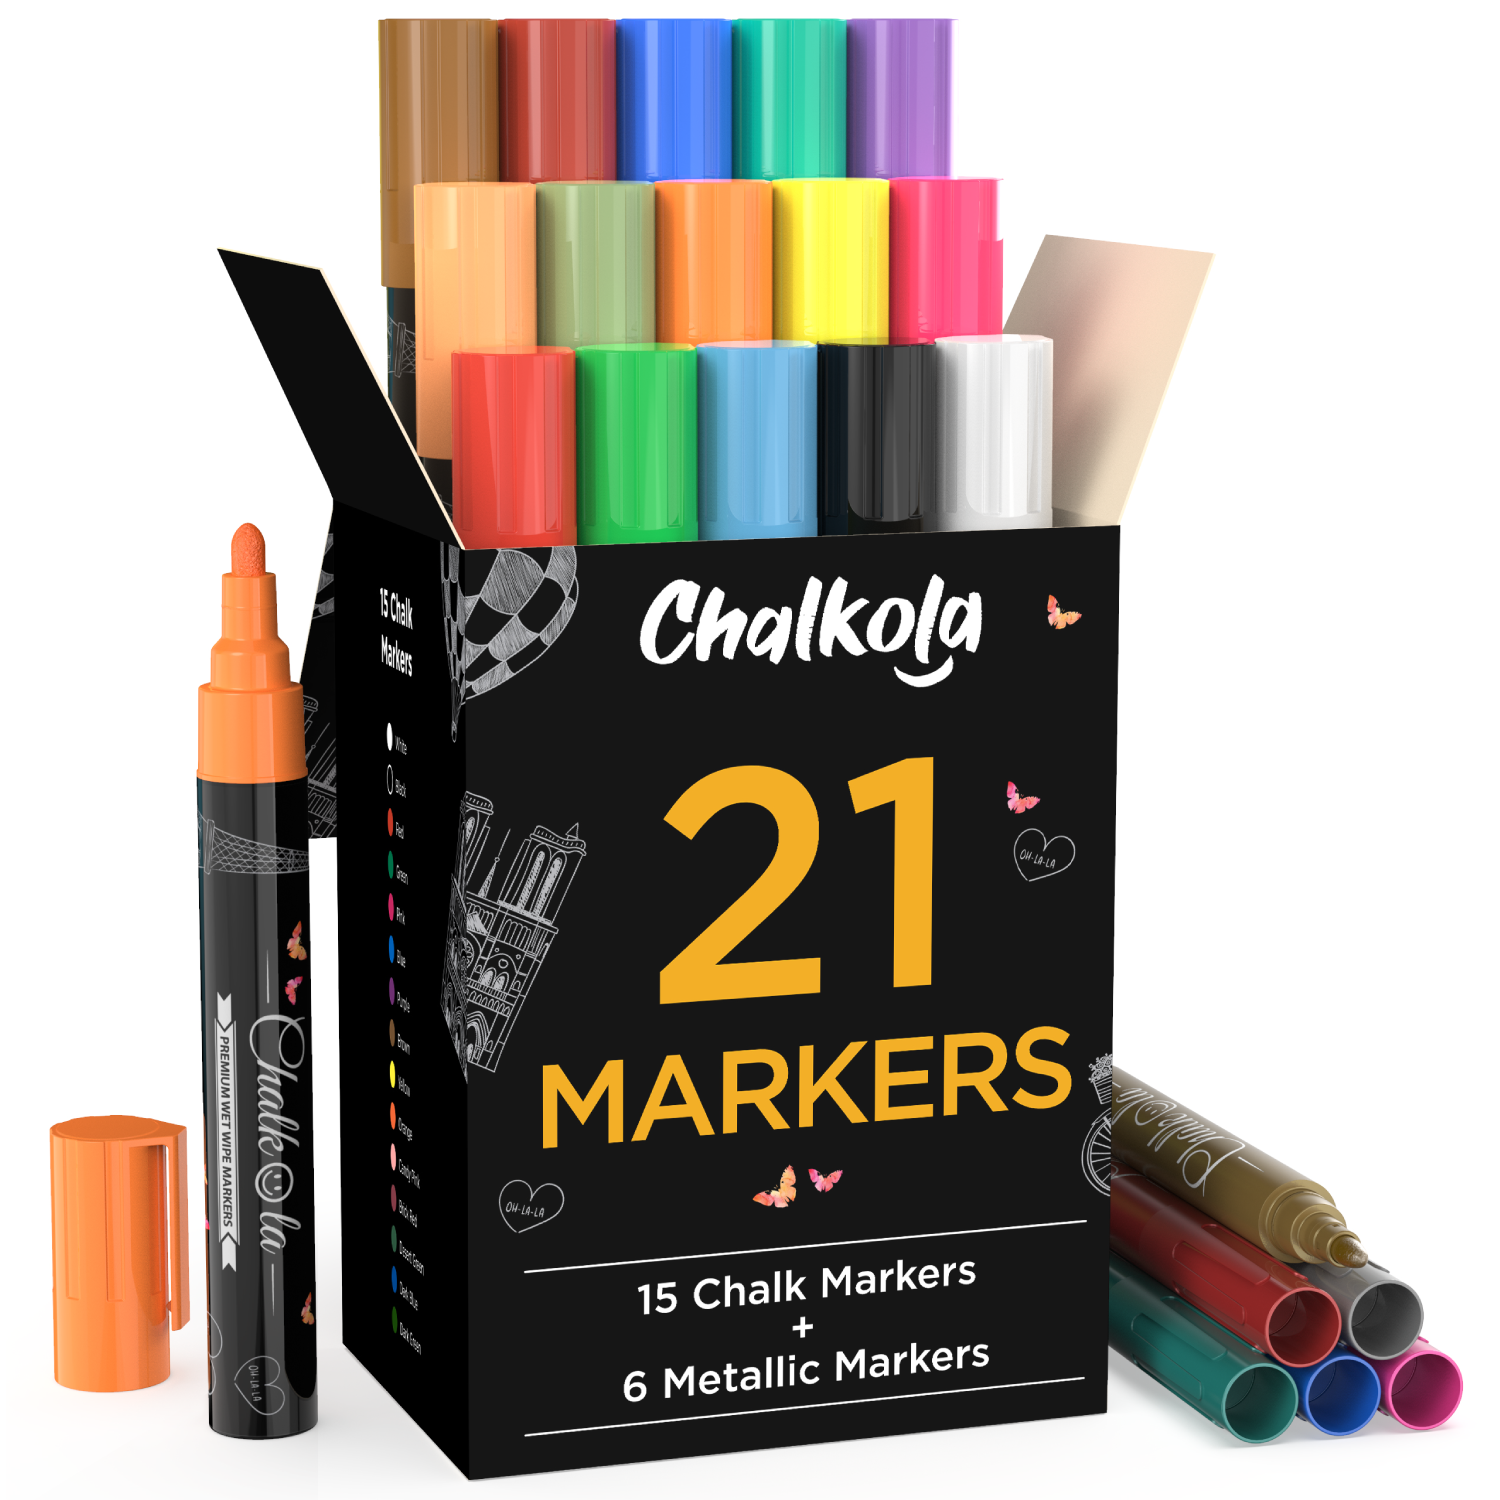 Chalkola Chalk Pens & Metallic Colors - Pack of 21 Chalk Markers